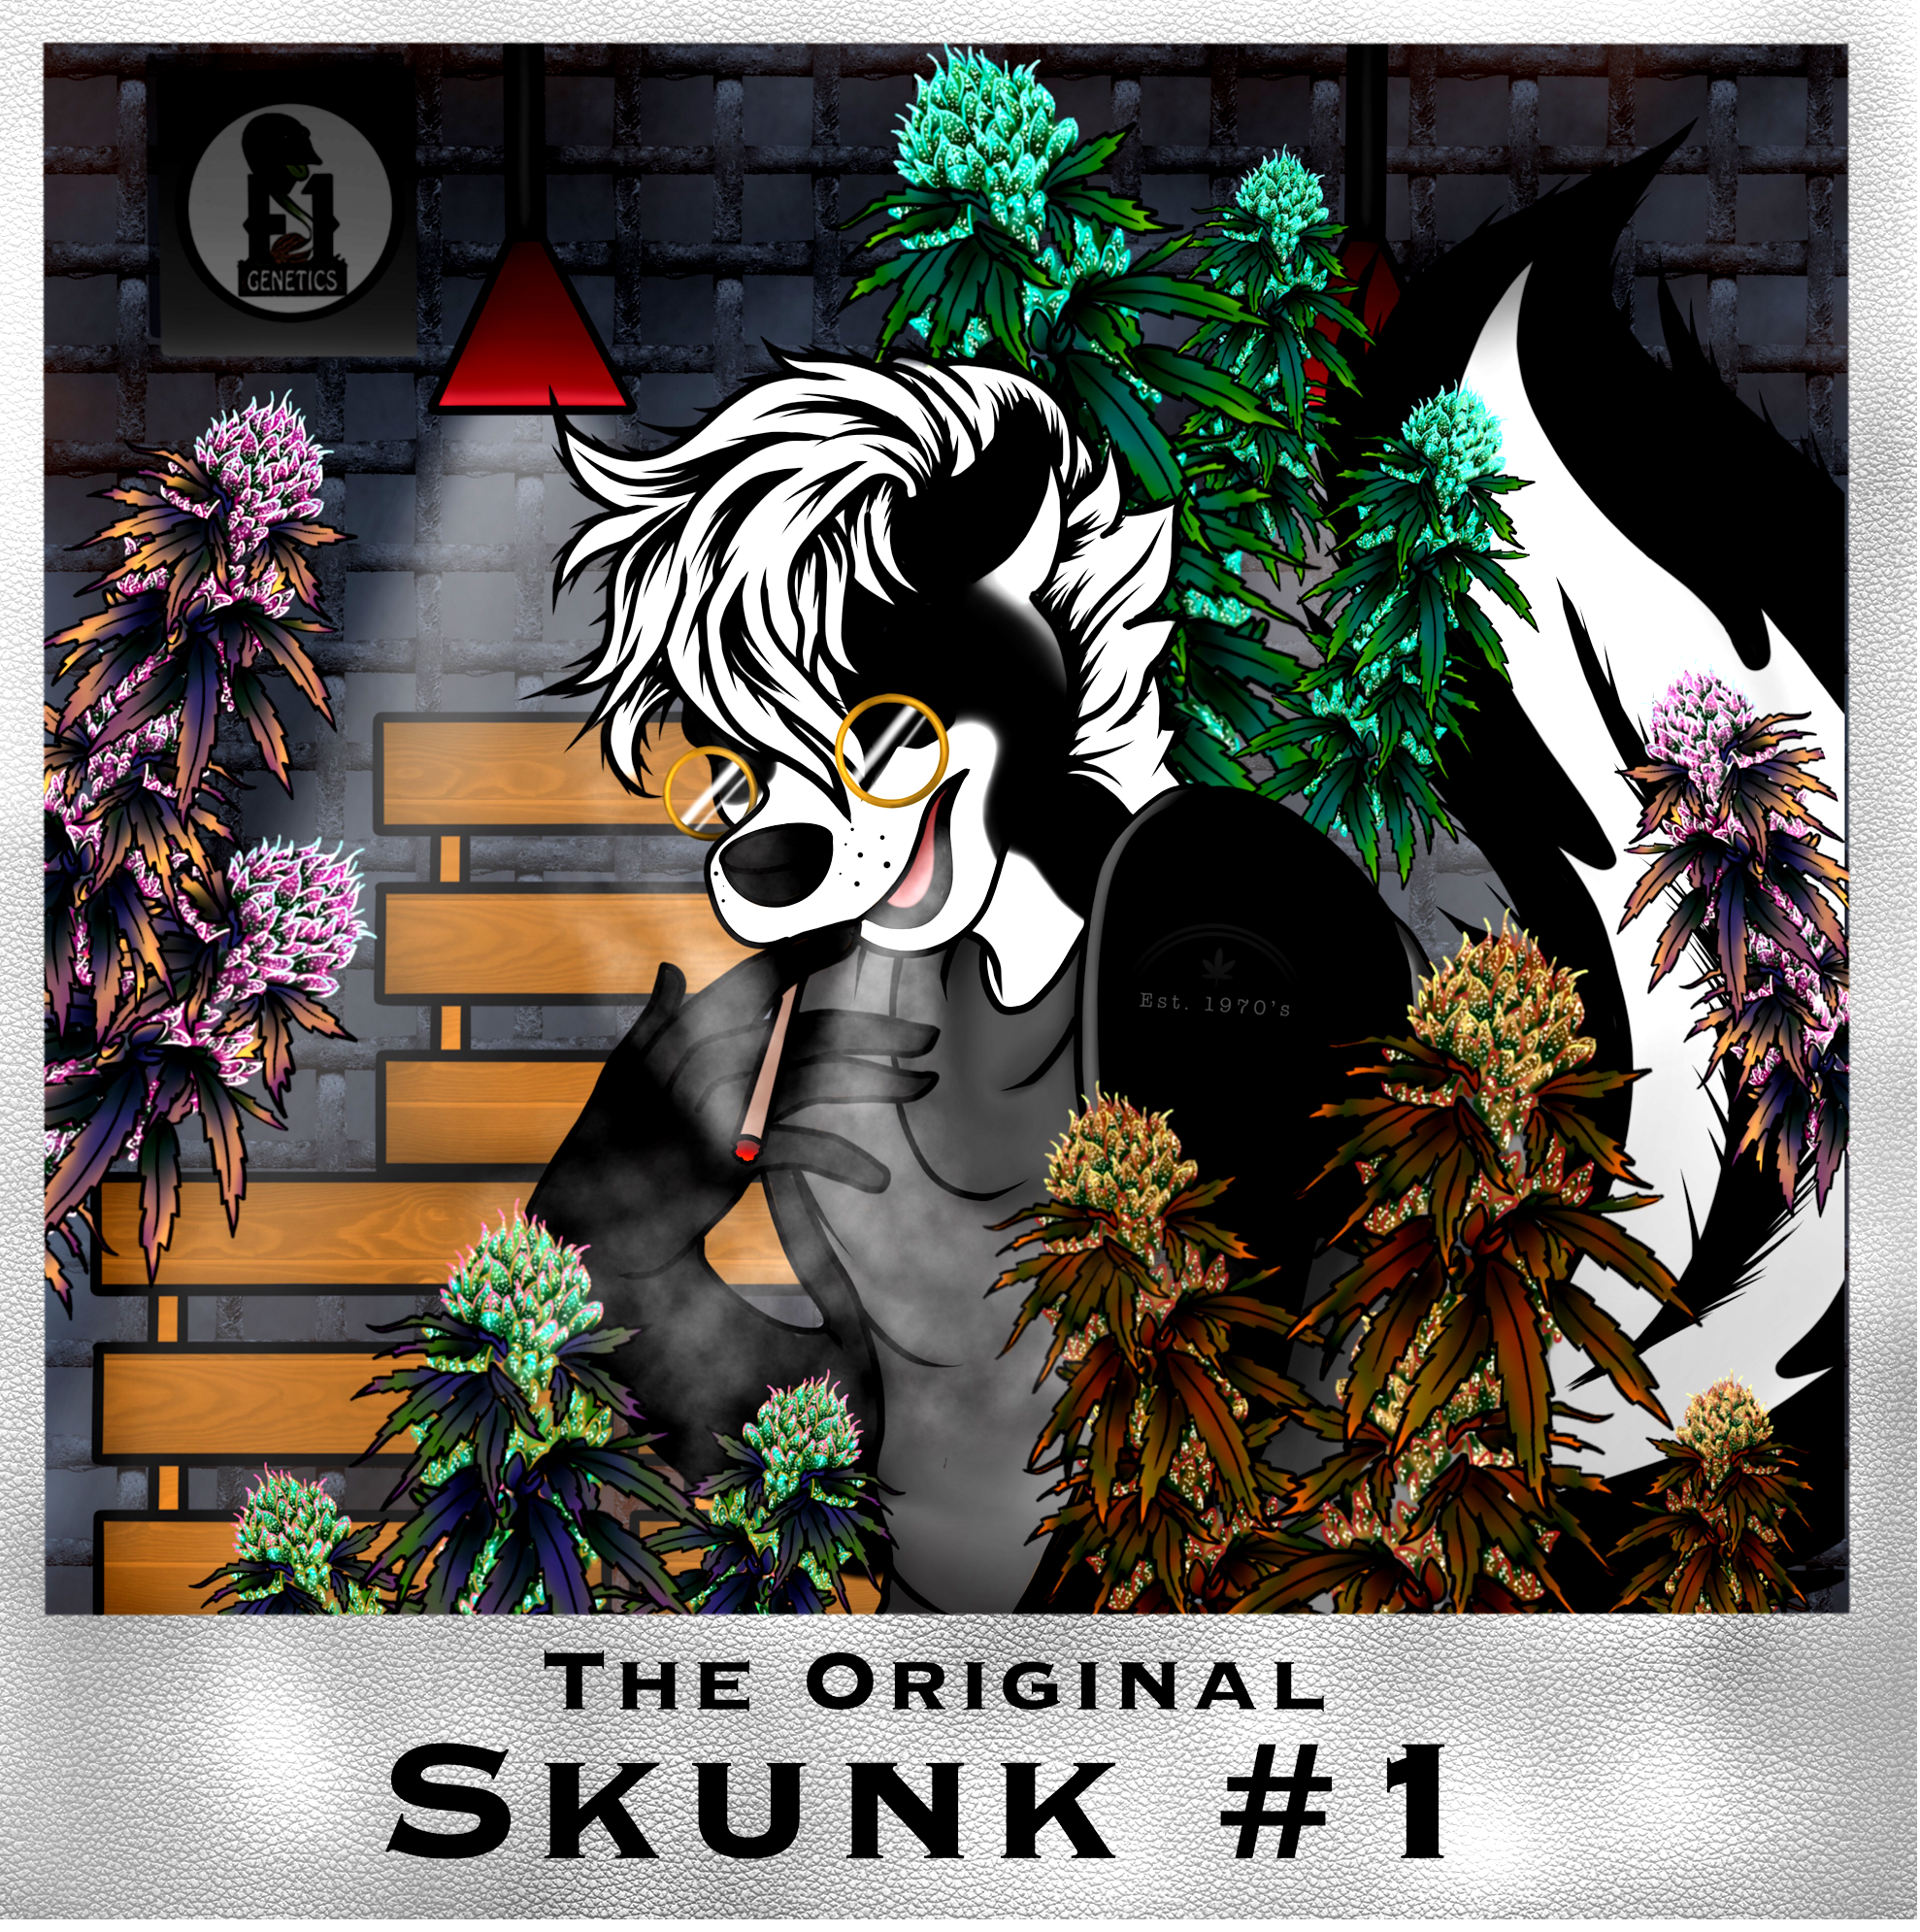 Skunk #1 (Original) from Sam the Skunk Man, Dave Watson